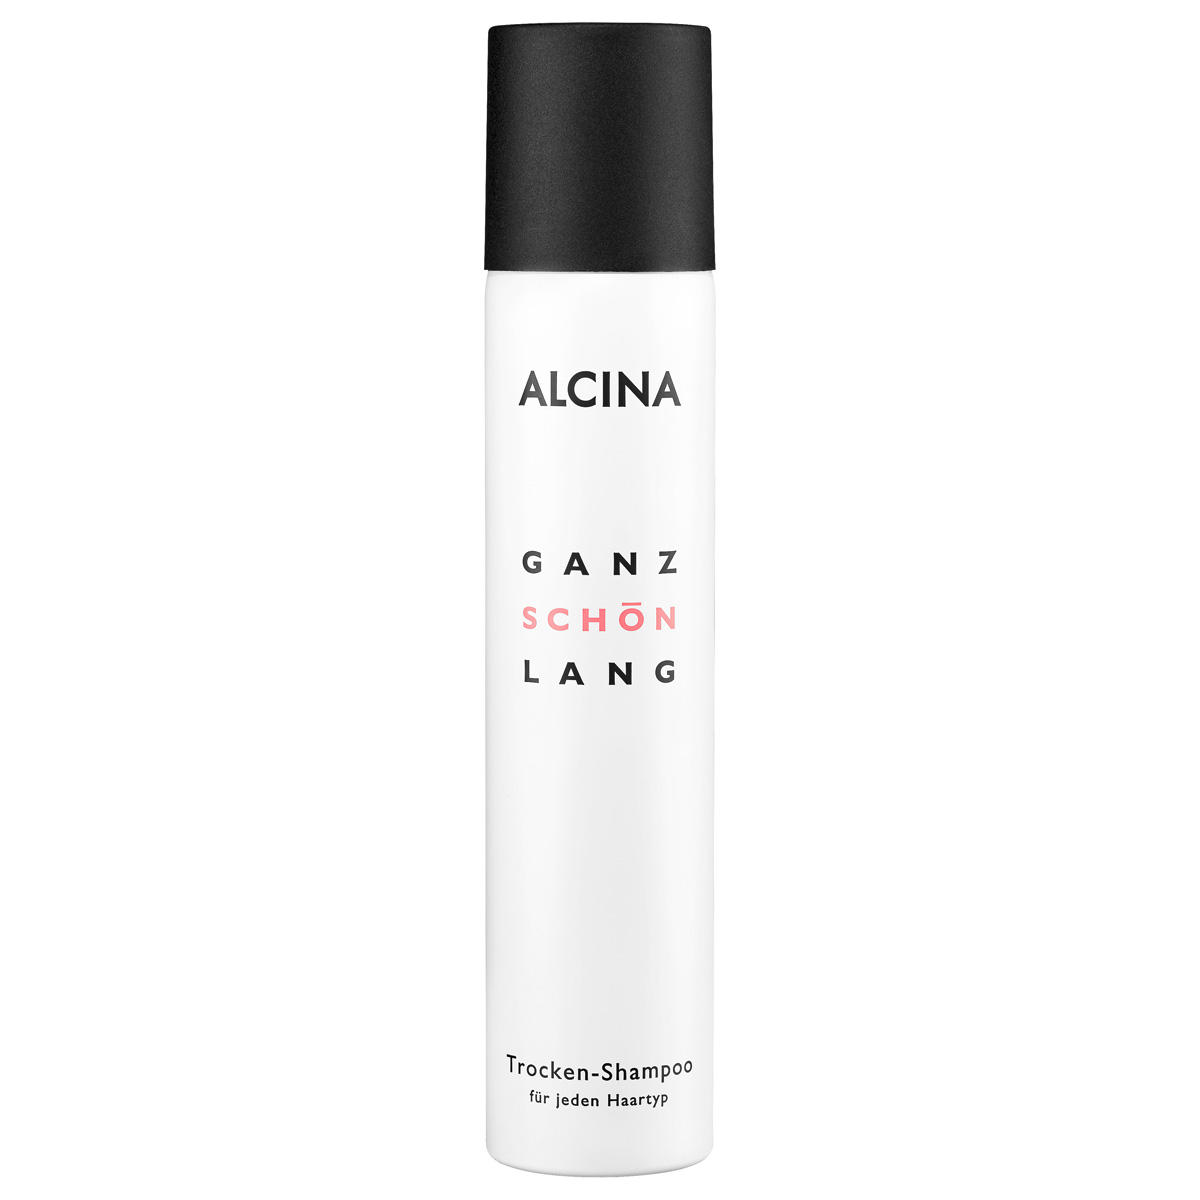 Alcina GANZ SCHÖN LANG Trocken-Shampoo 200 ml - 1